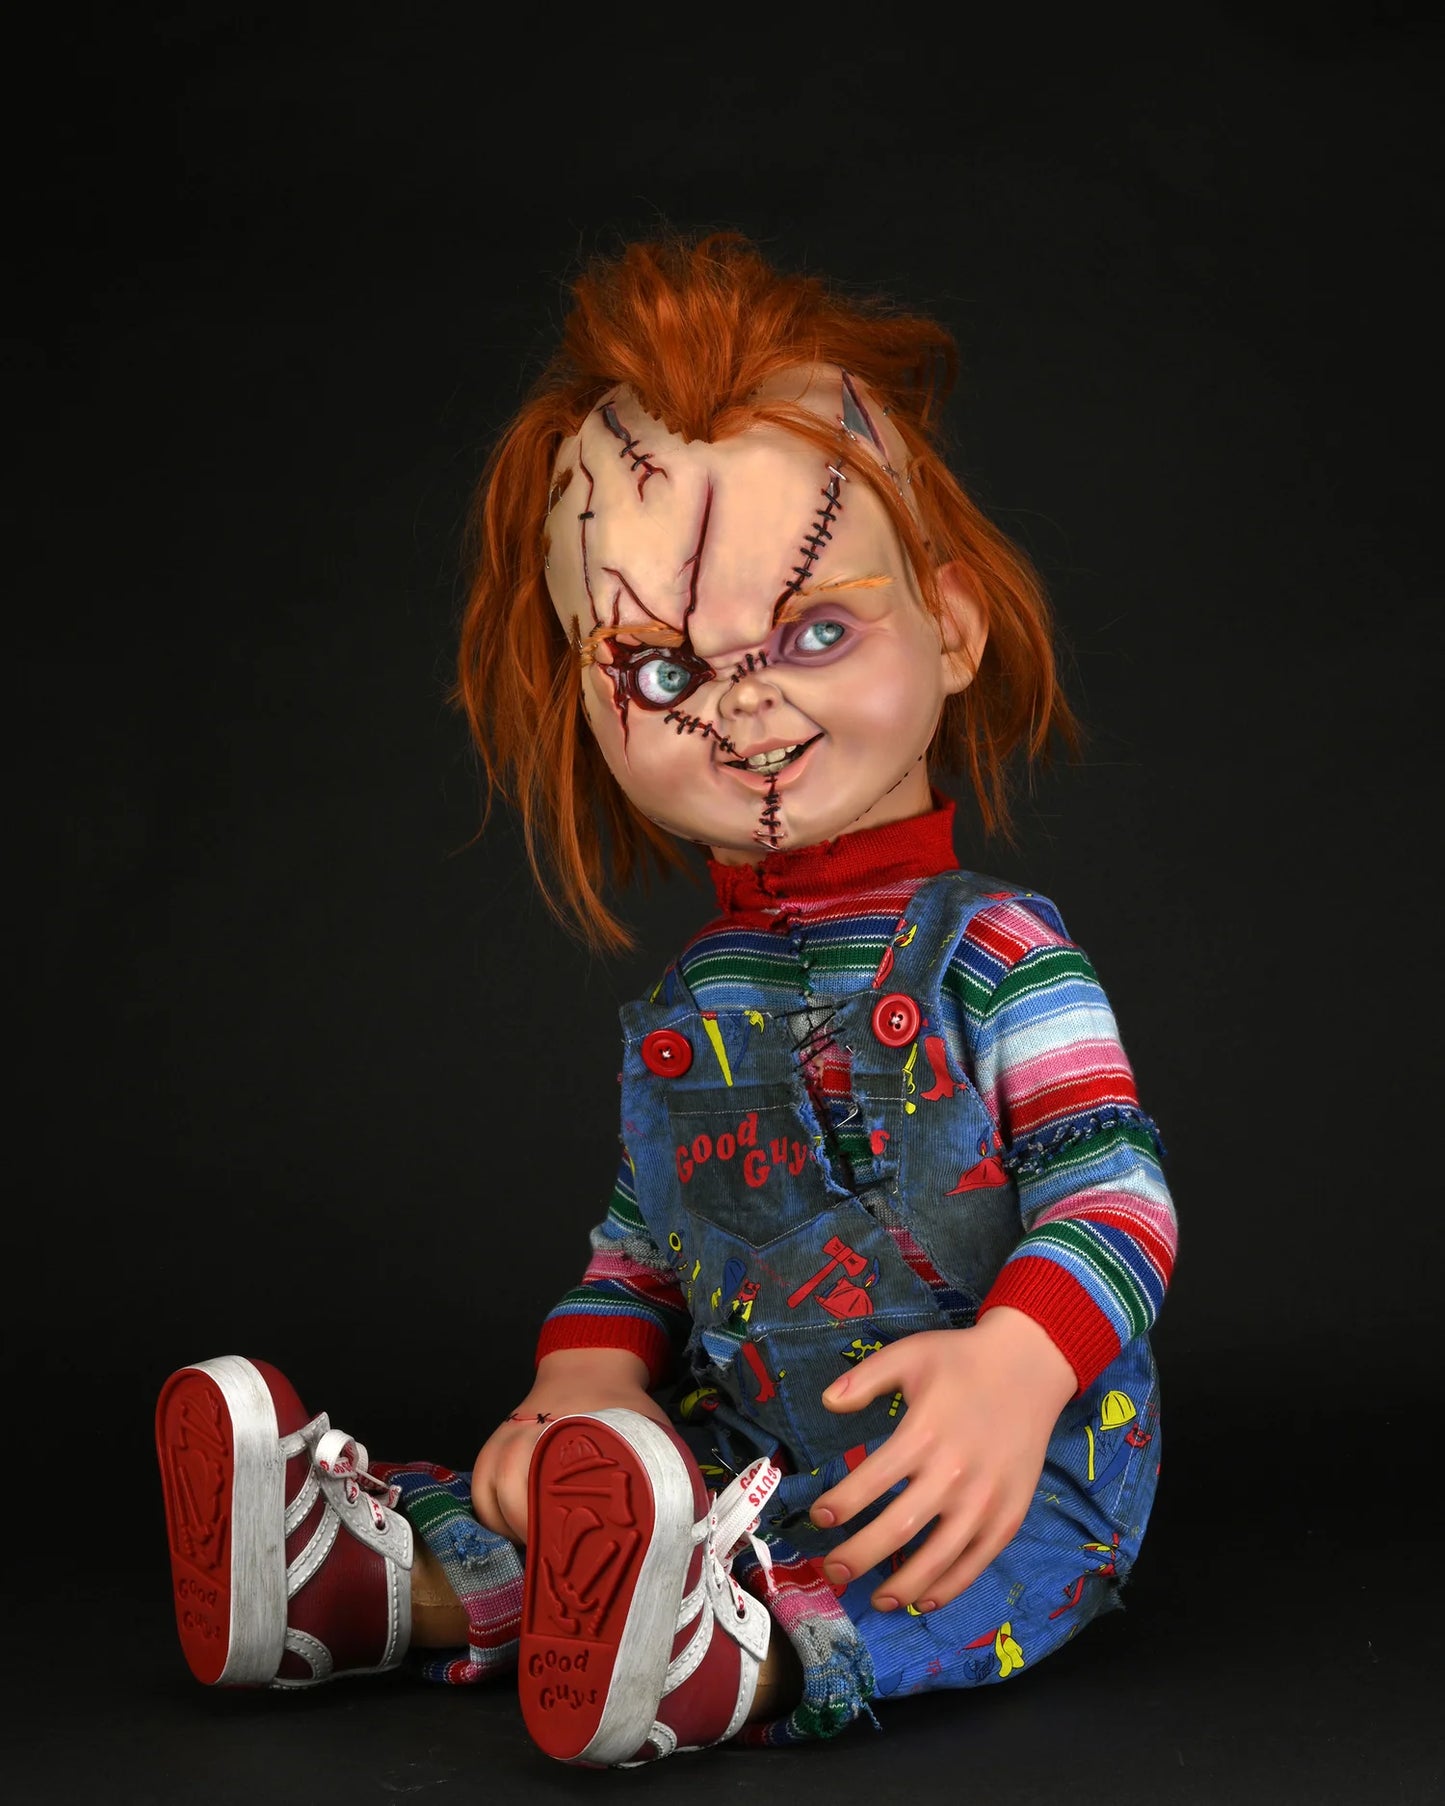 Child's Play Bride of Chucky - Chucky Life-Size 1:1 Scale Replica